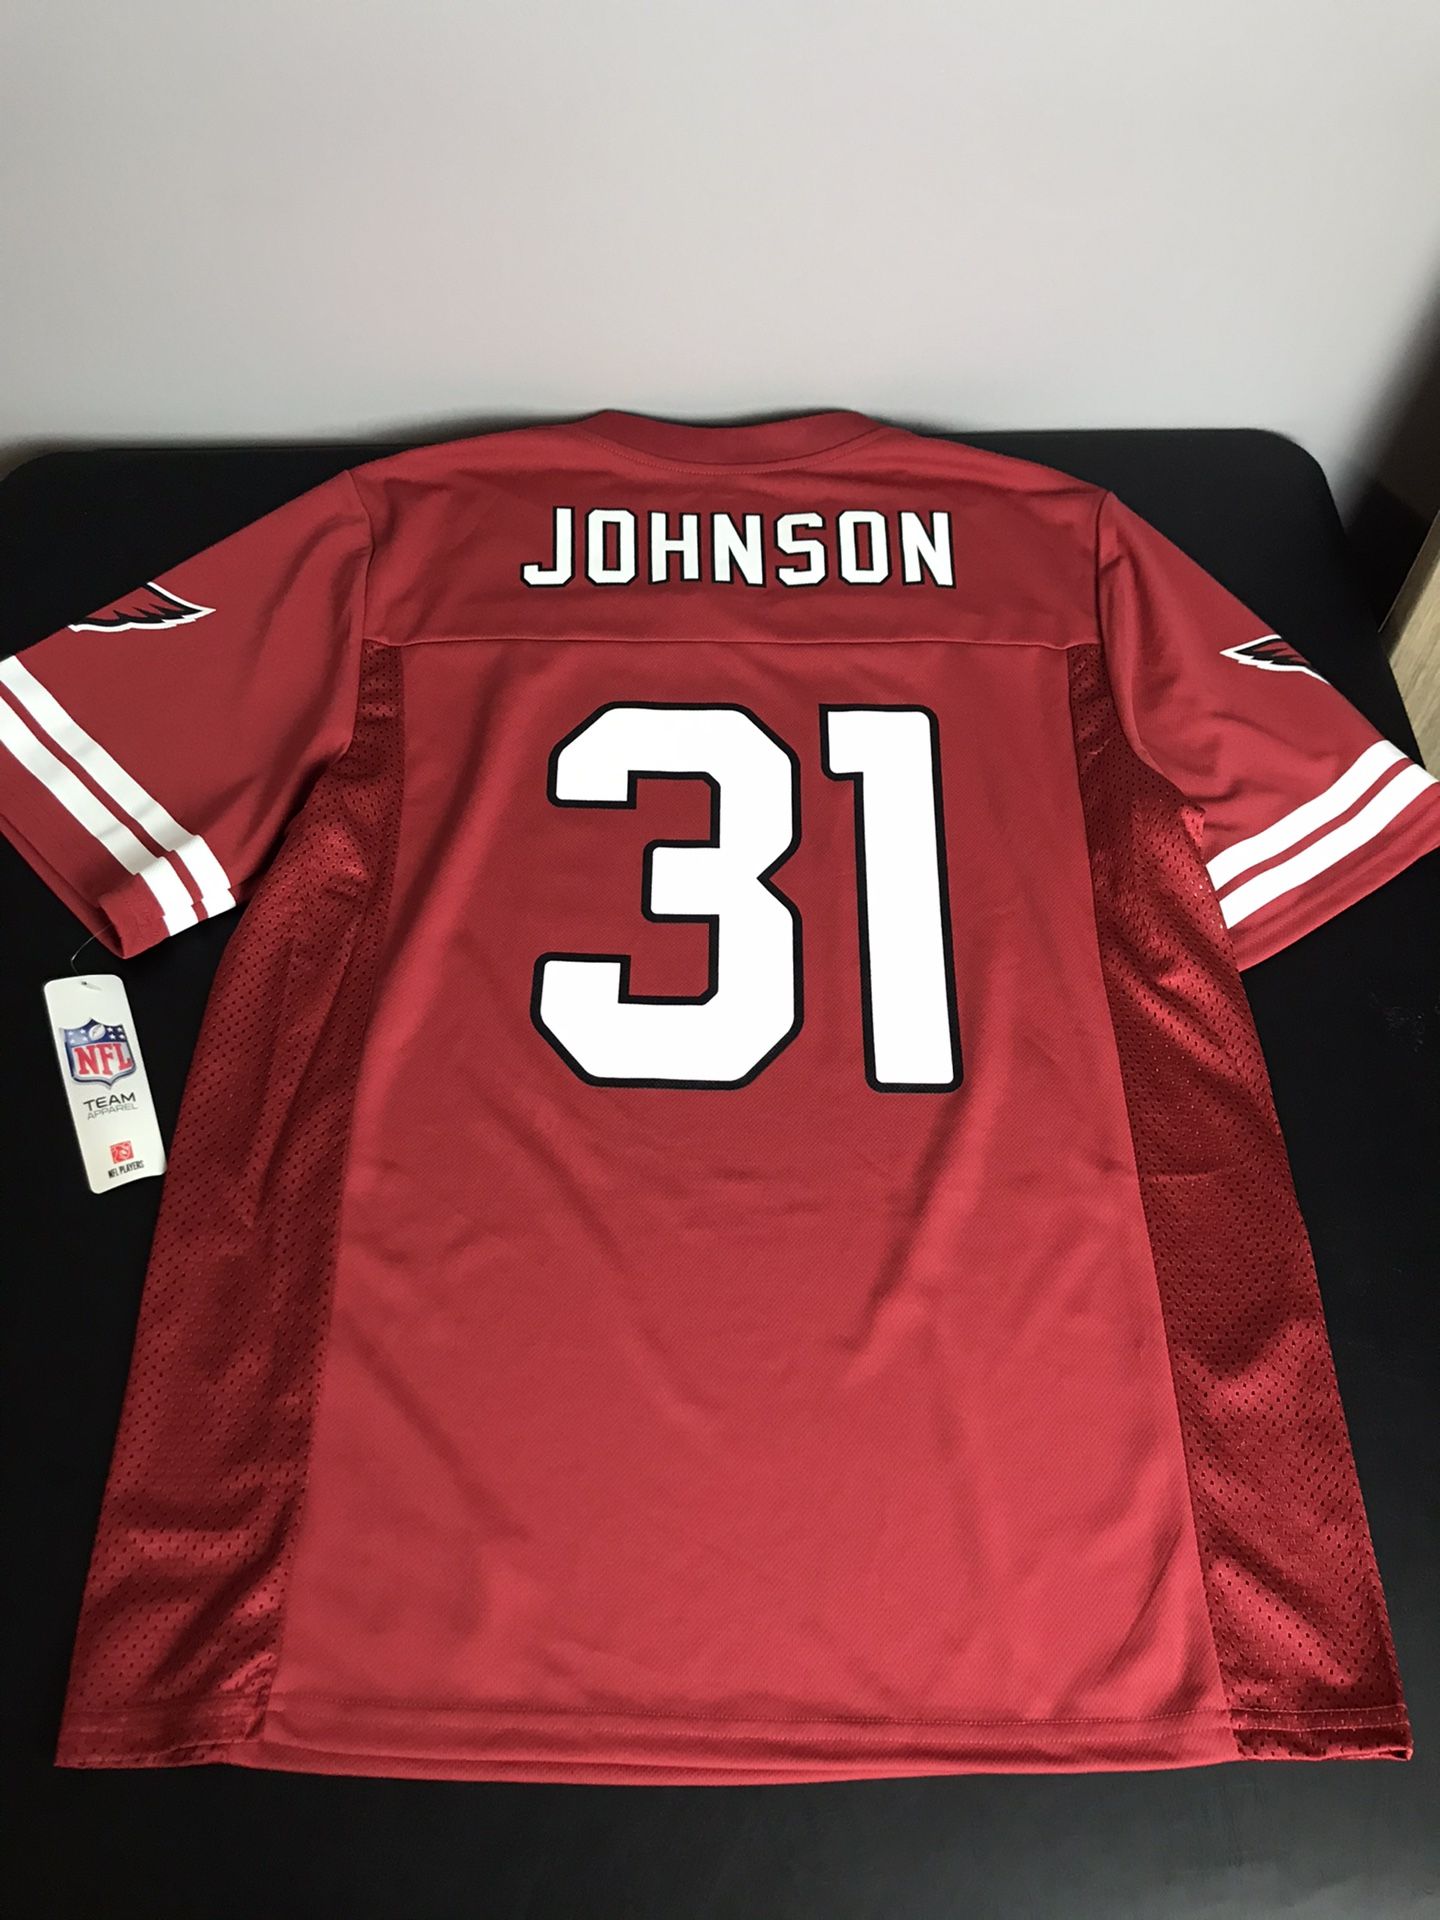 *New* NFL Arizona Cardinals Game Jersey David Johnson #31 Size M New with tags